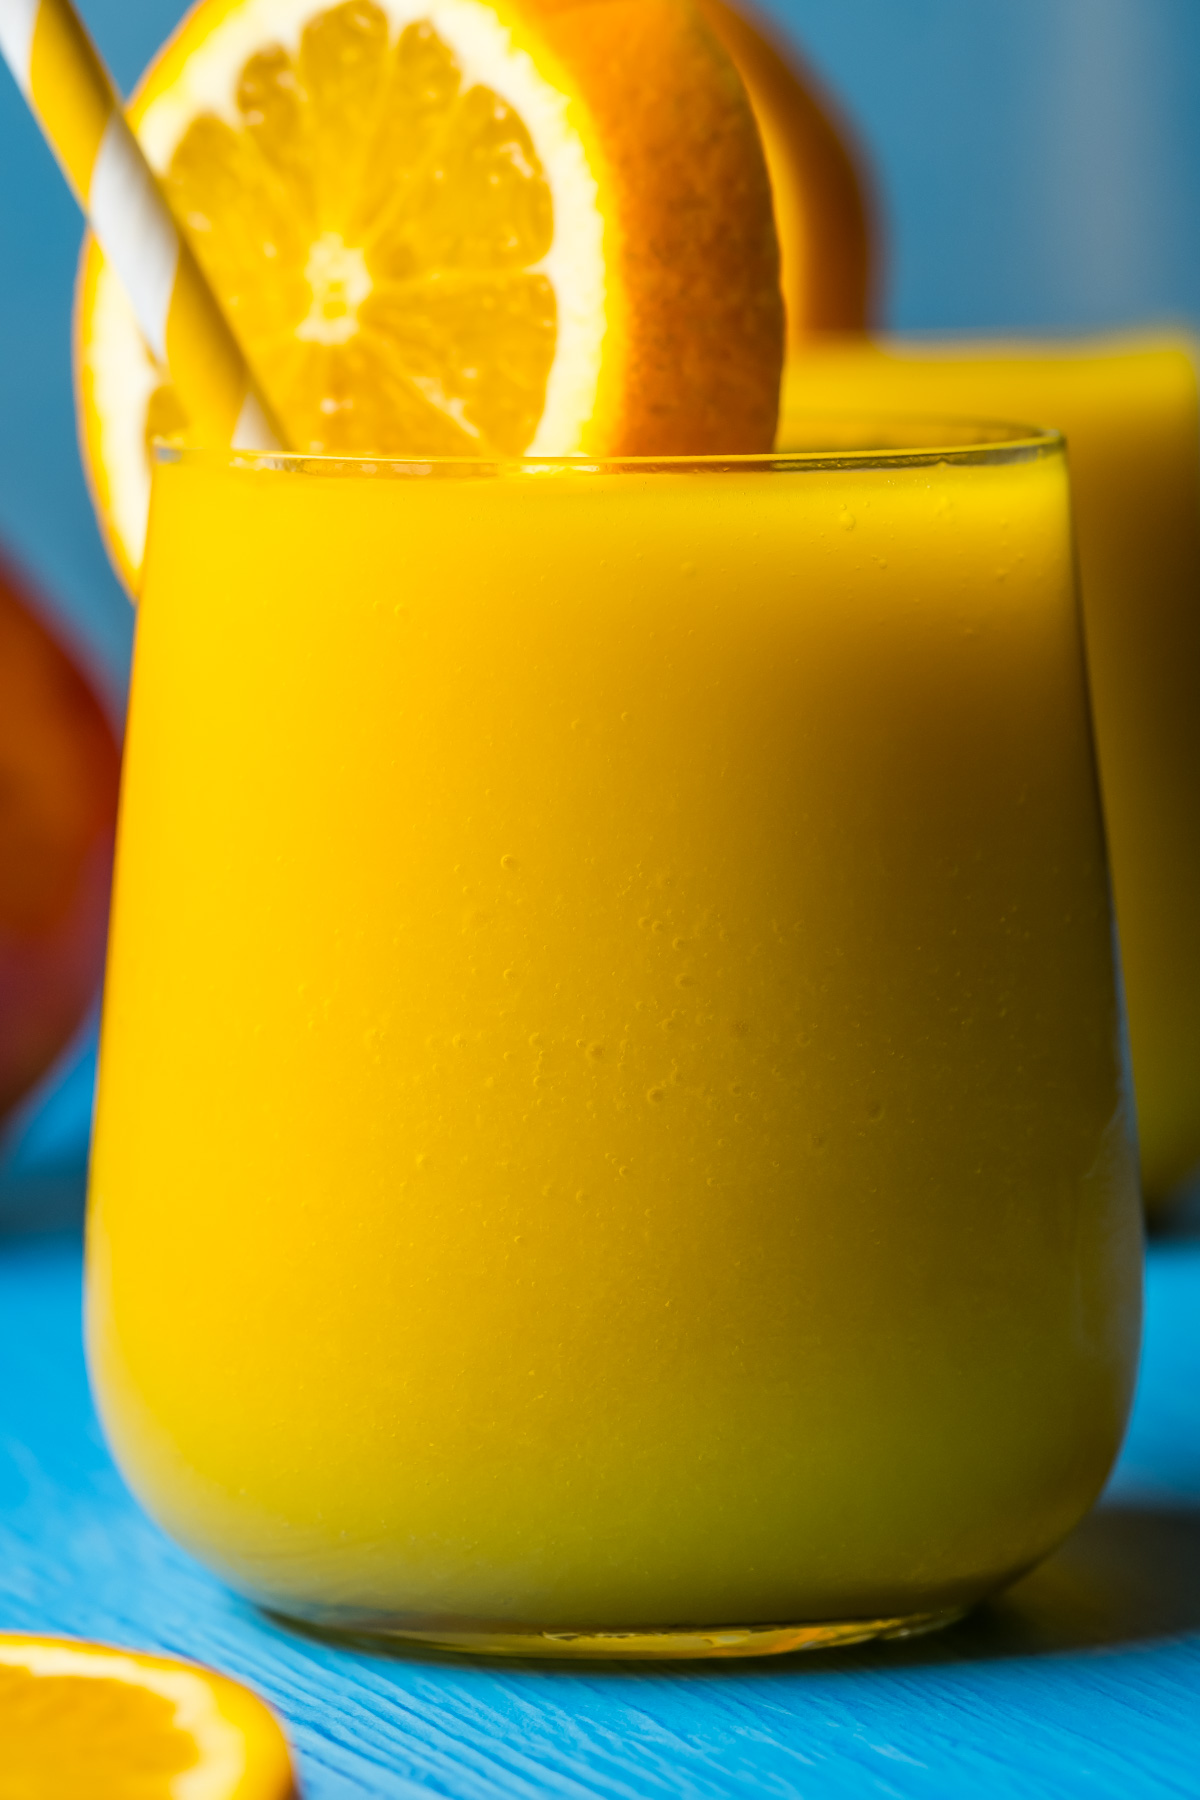 Mango orange smoothie in glasses with a slice of fresh orange and straws.